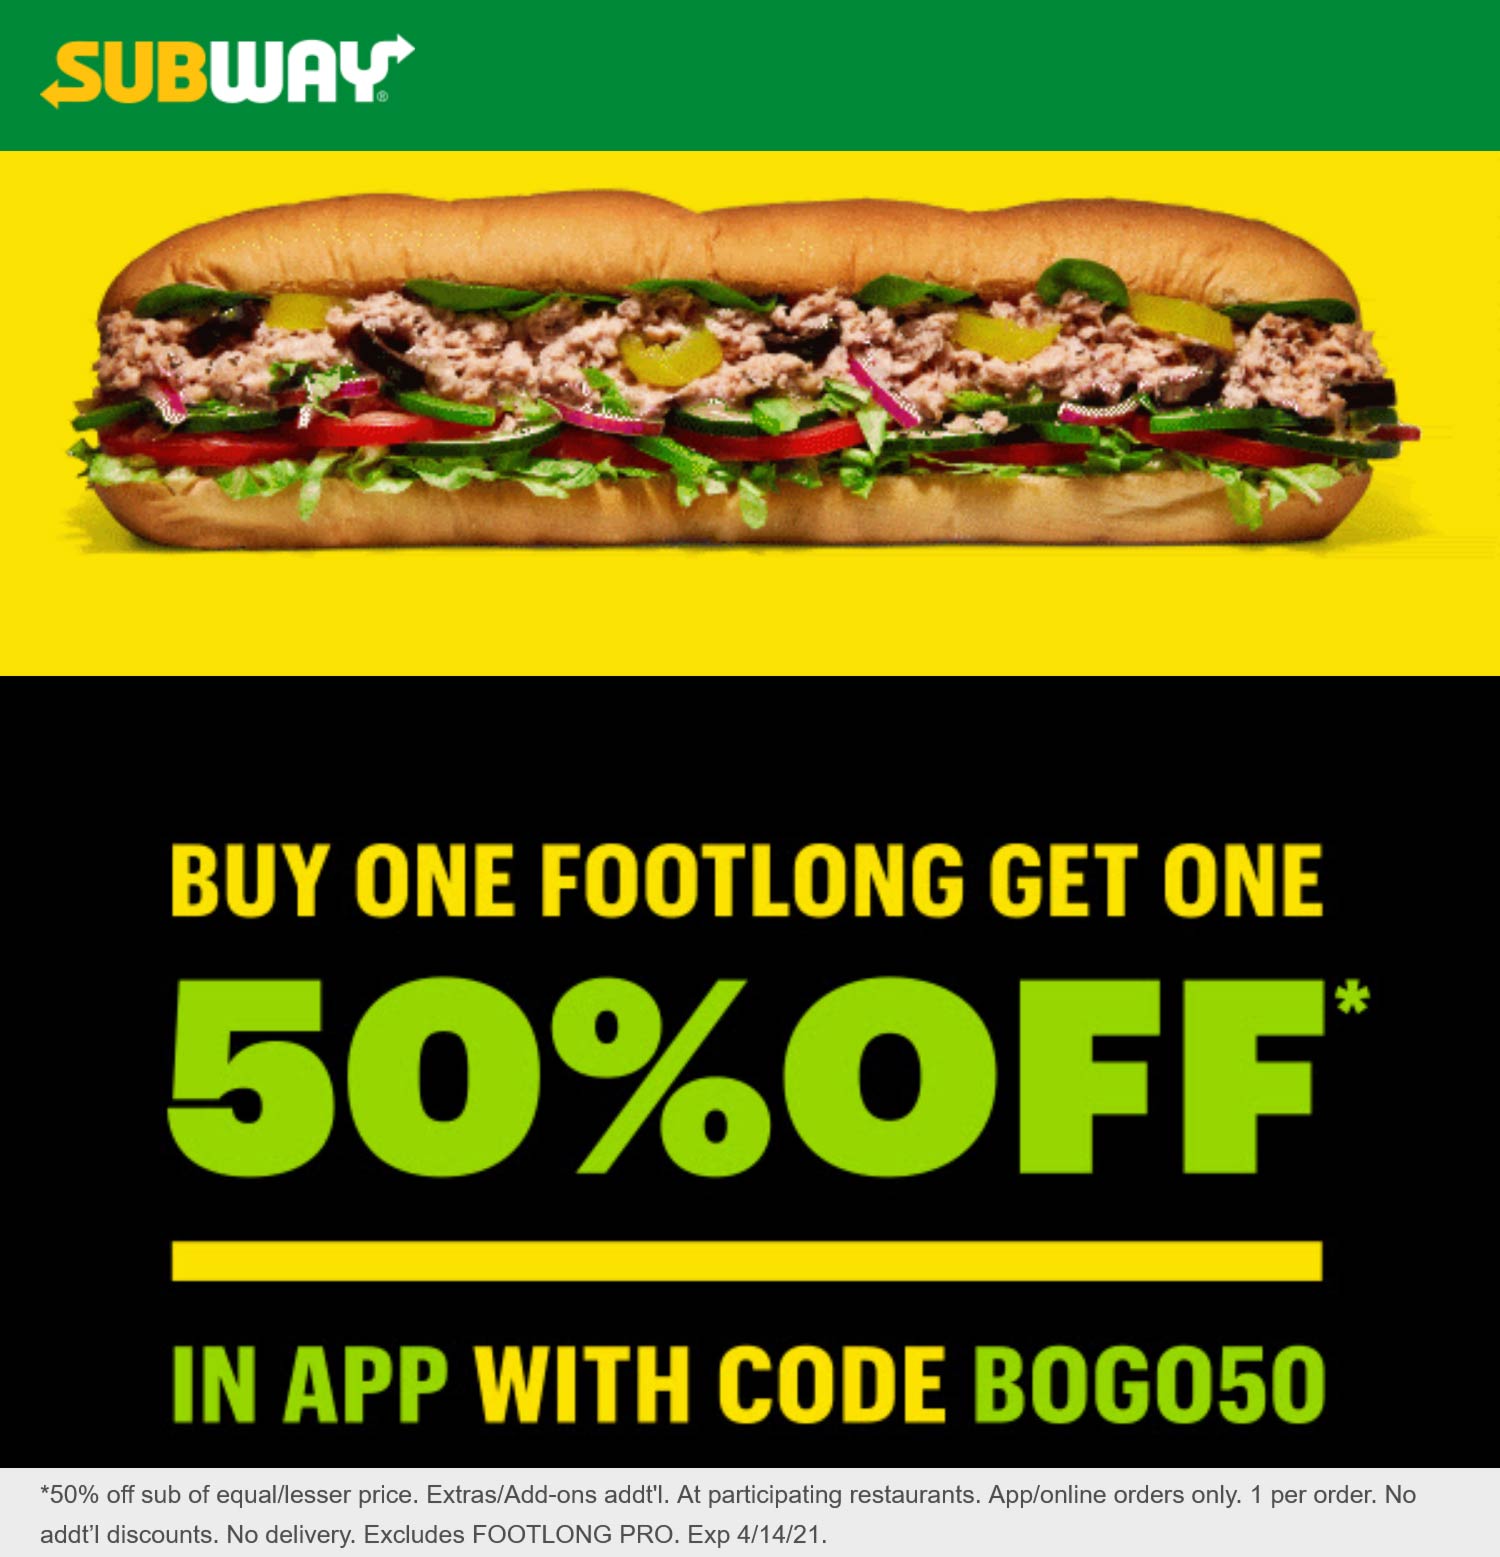 50-off-second-footlong-sandwich-at-subway-via-promo-code-bogo50